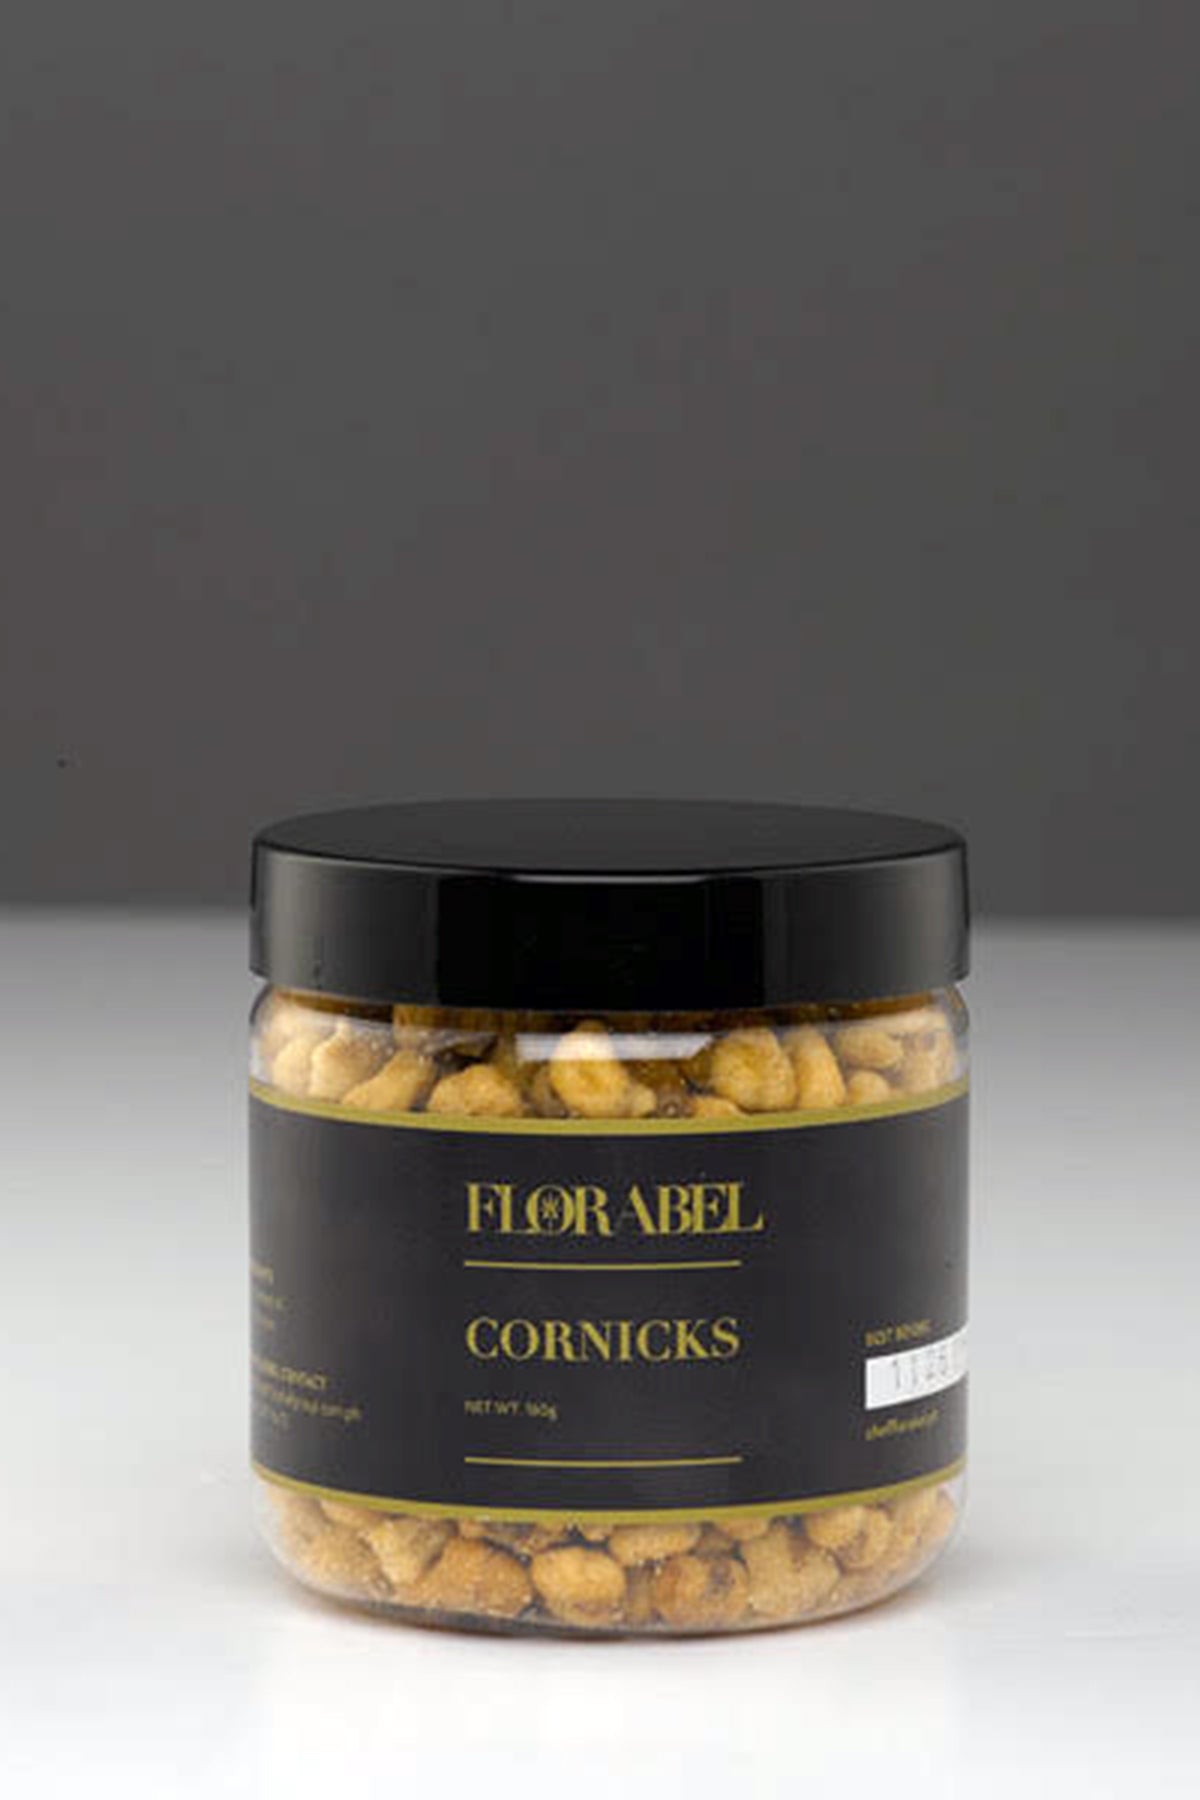 Florabel Cornicks